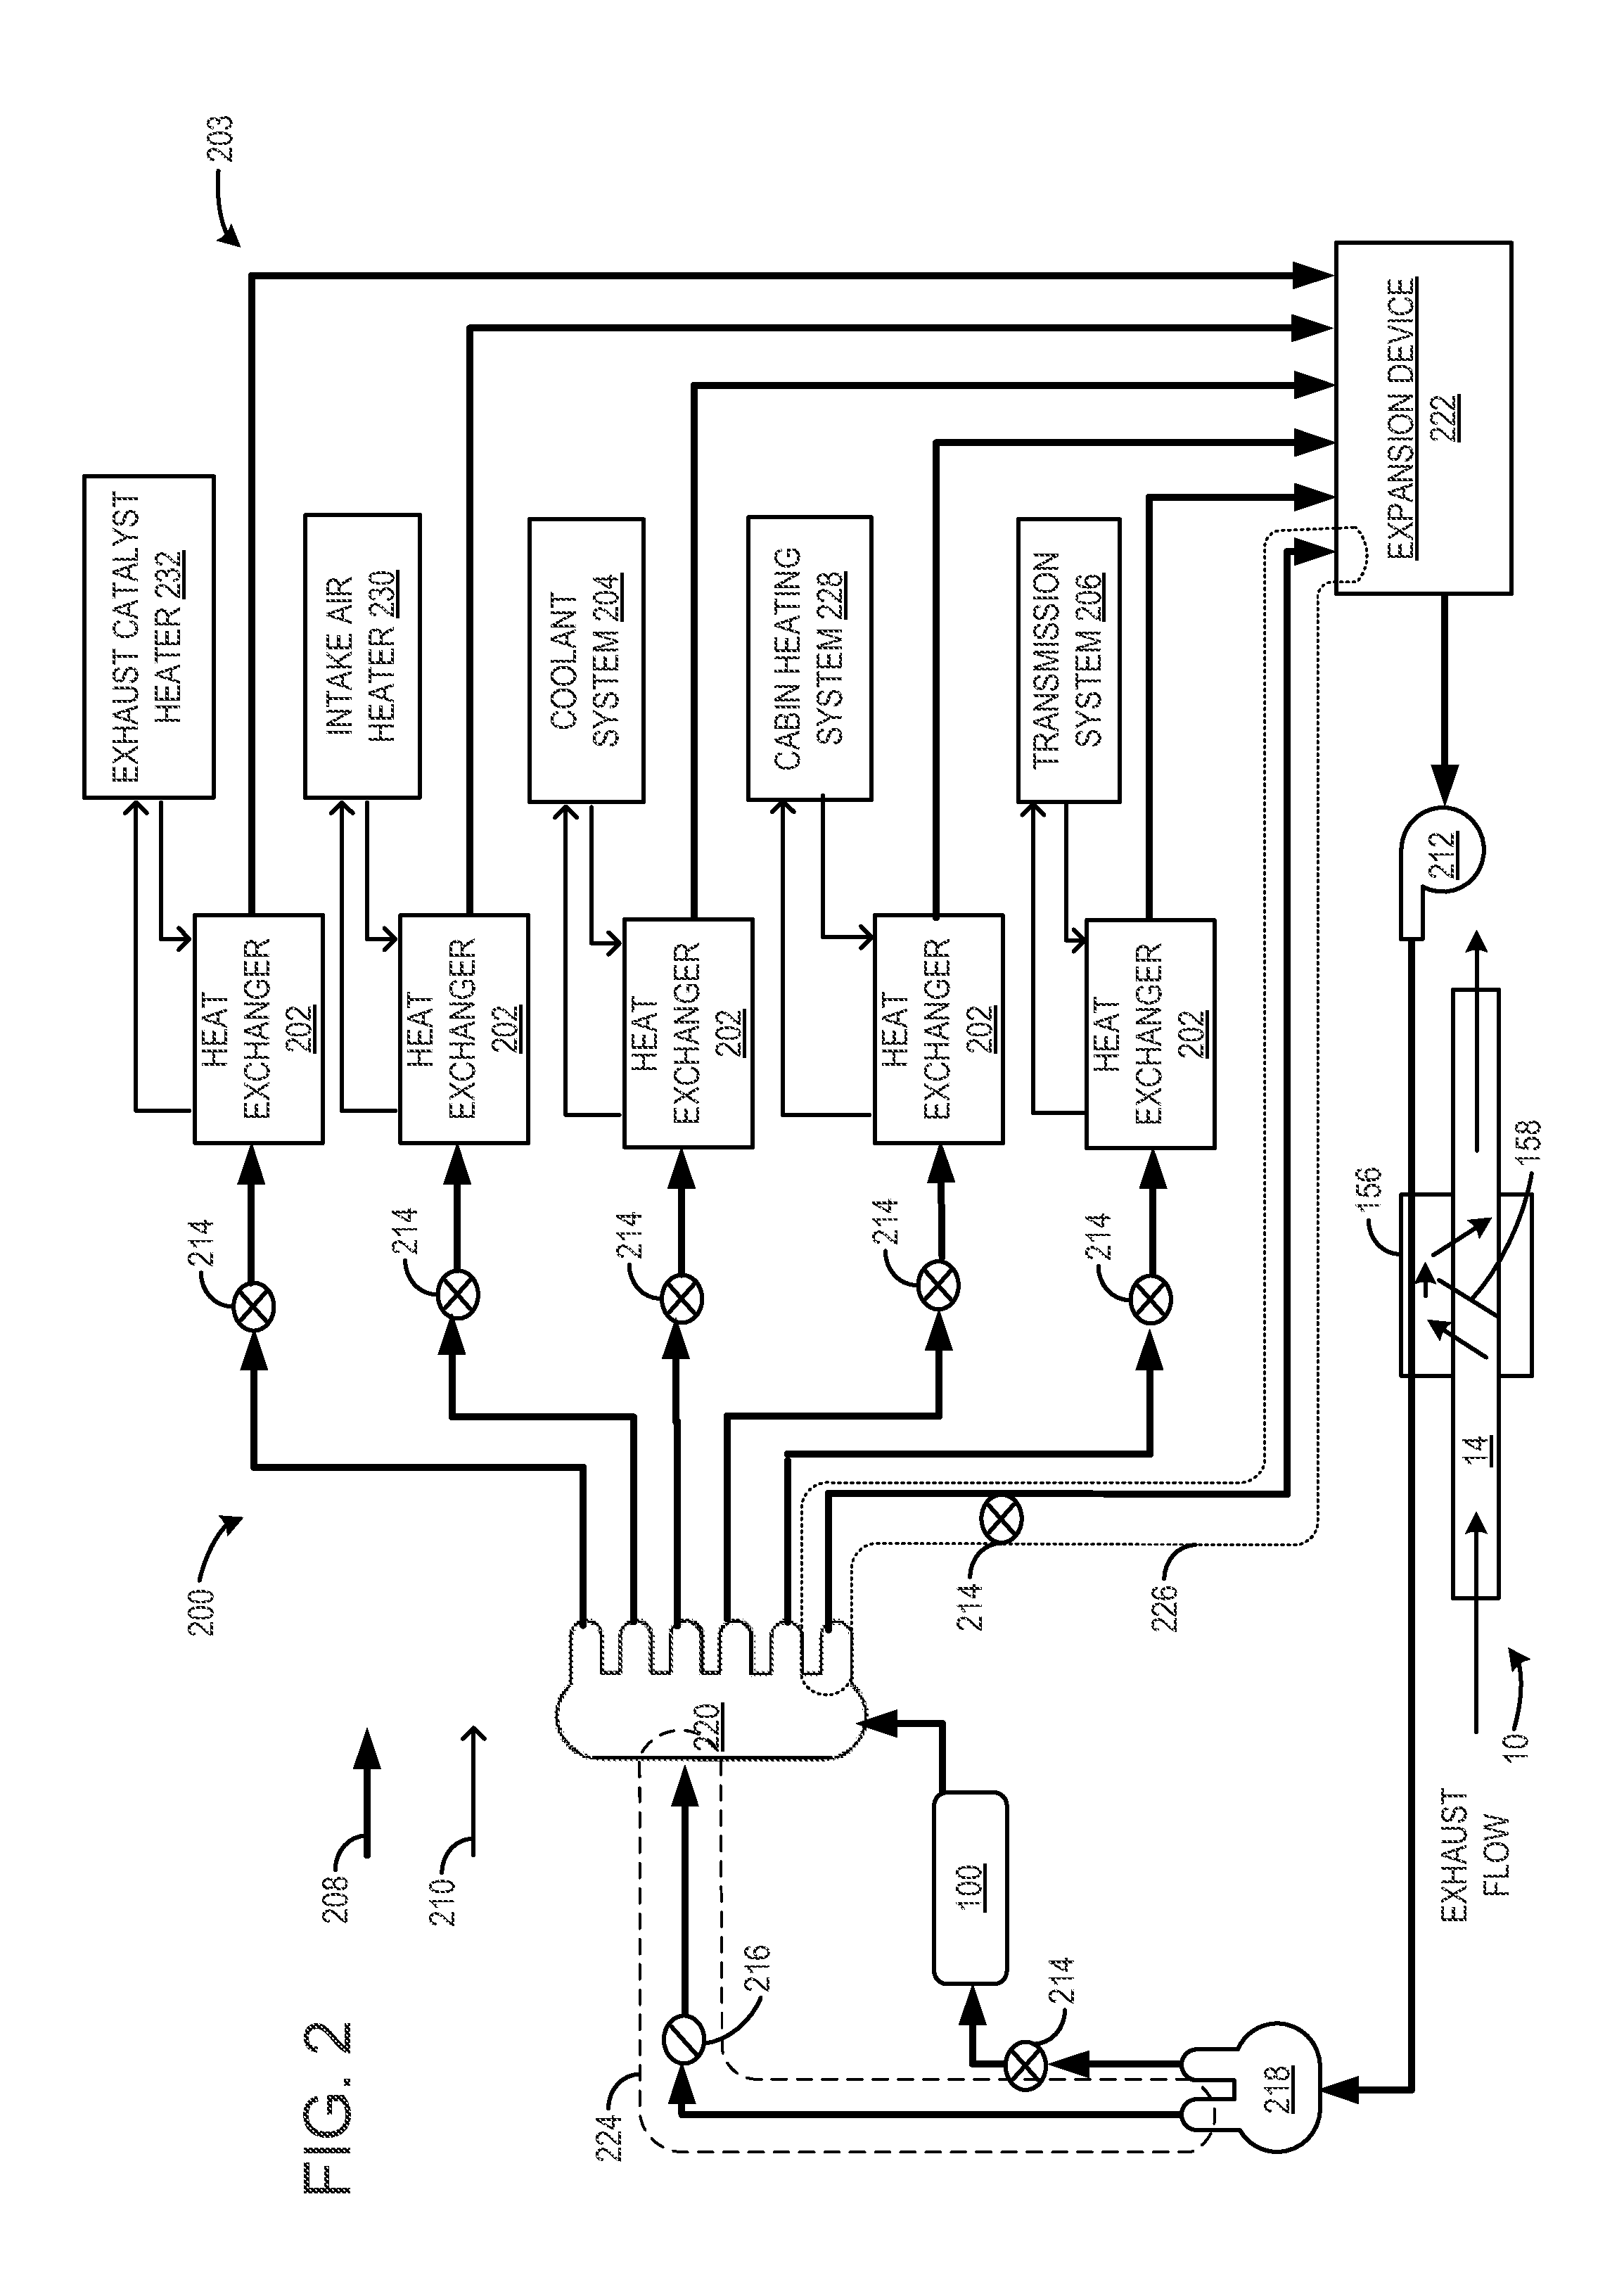 Heat storage system for an engine